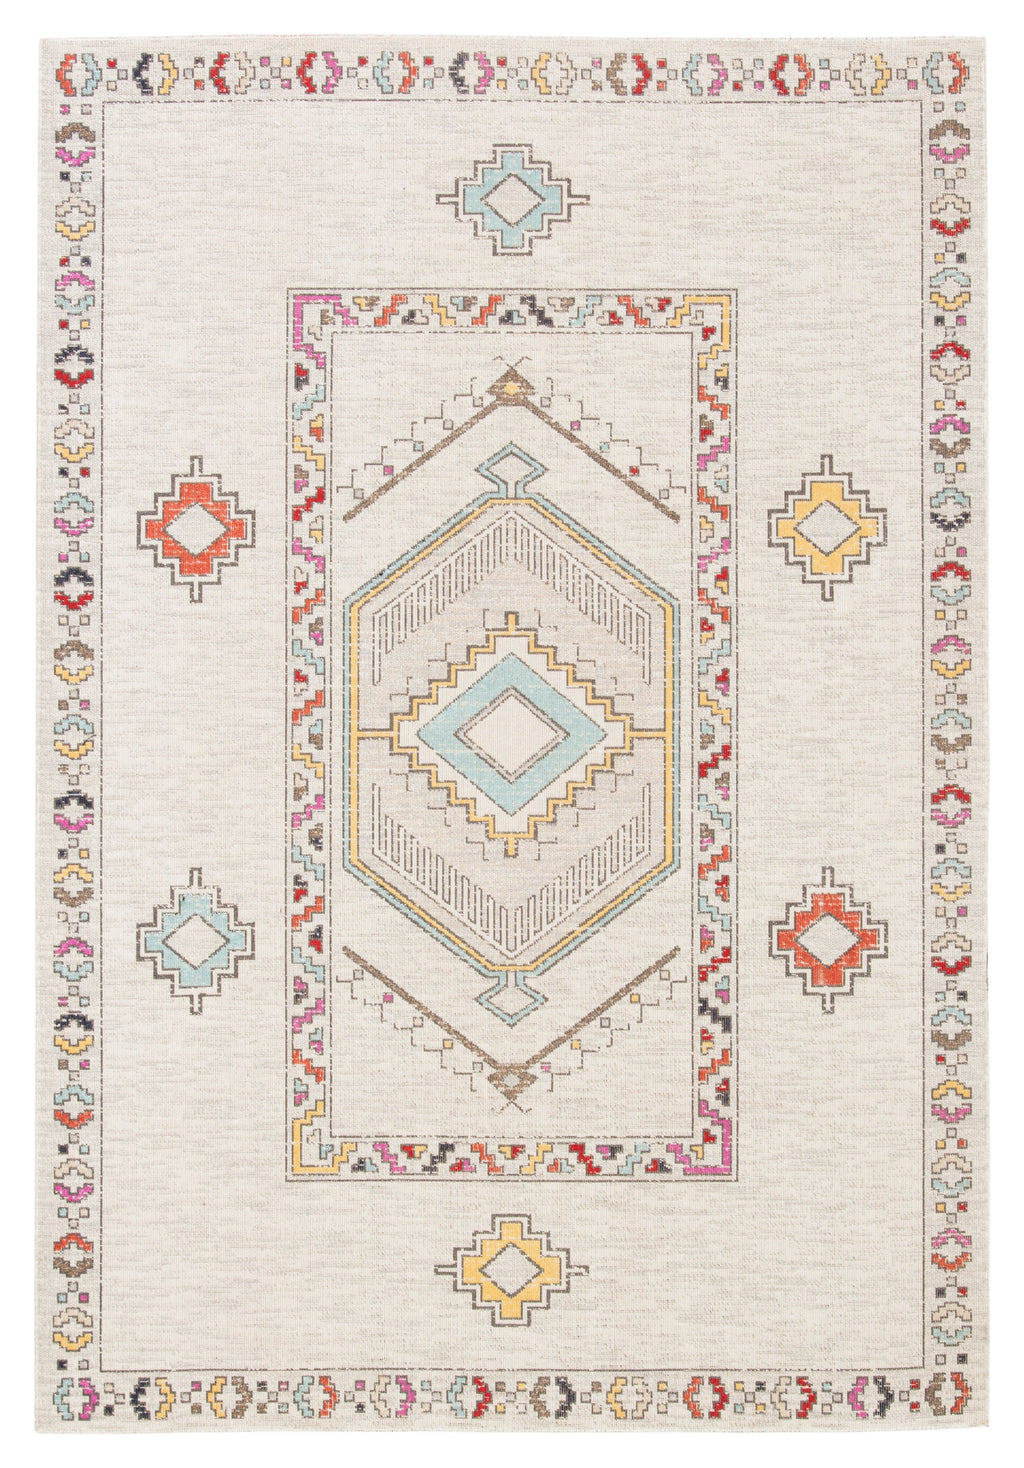 tov indoor outdoor medallion ivory multicolor rug design by jaipur 1